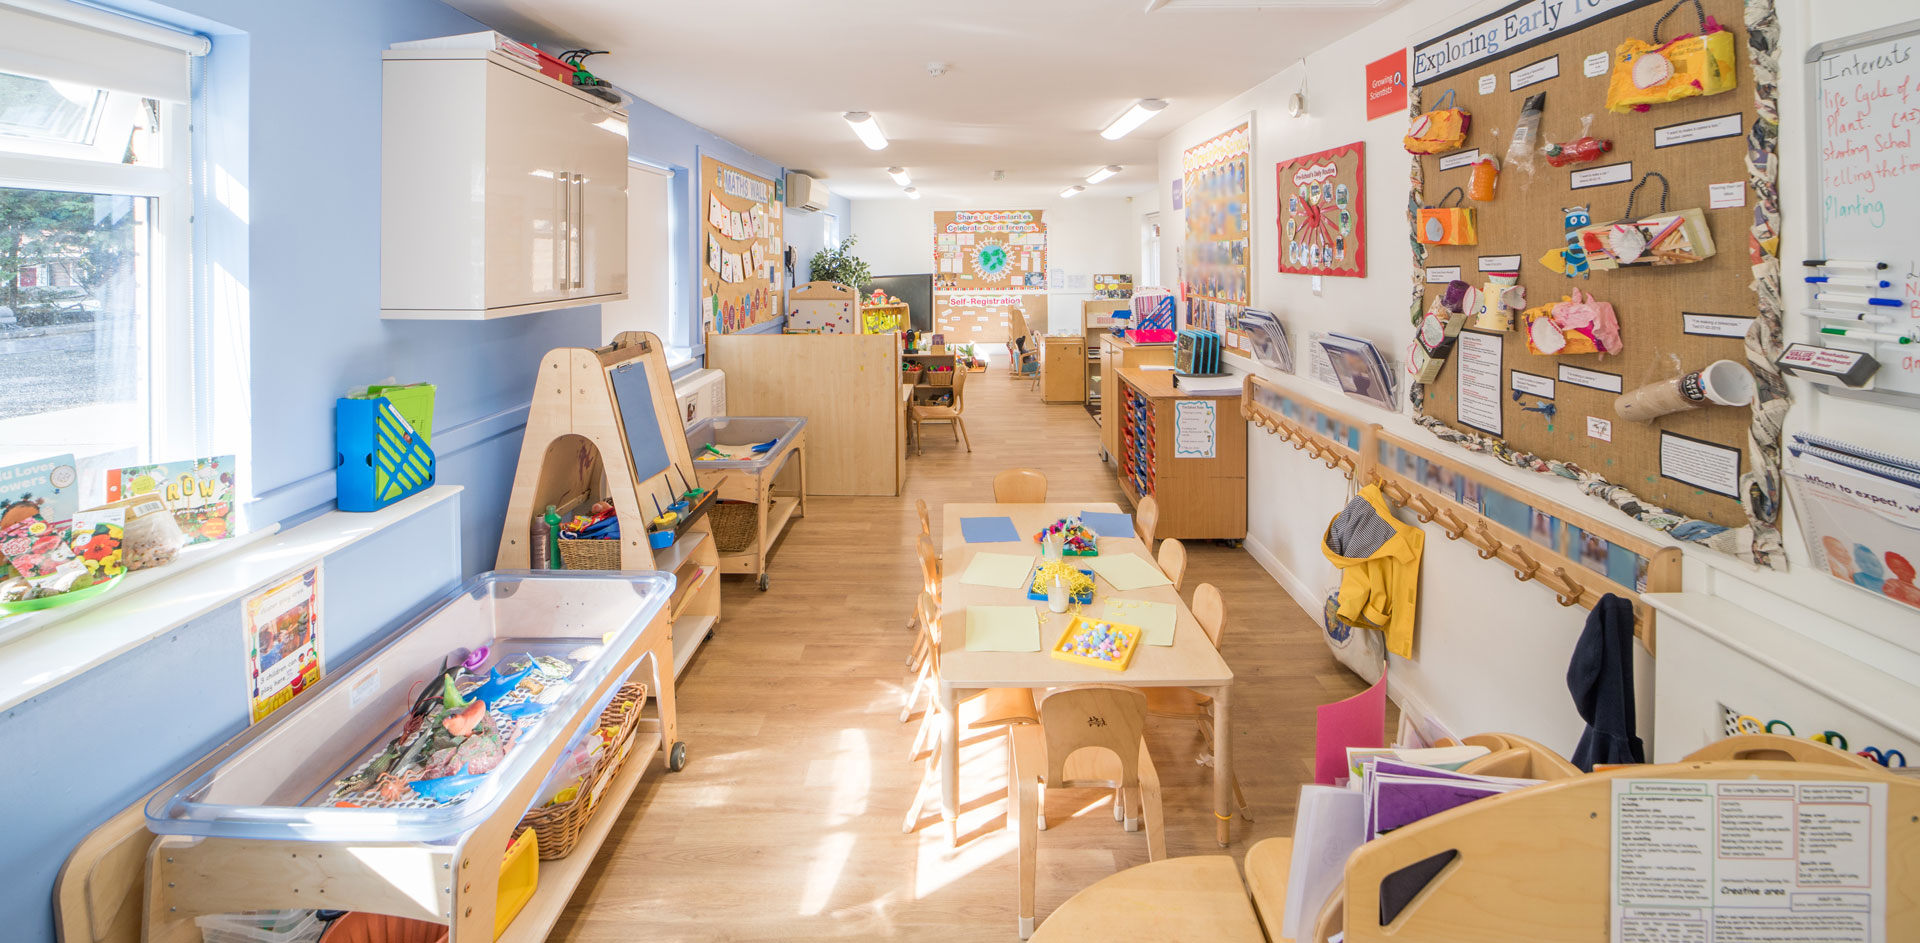 Peckham Rye Day Nursery and Preschool